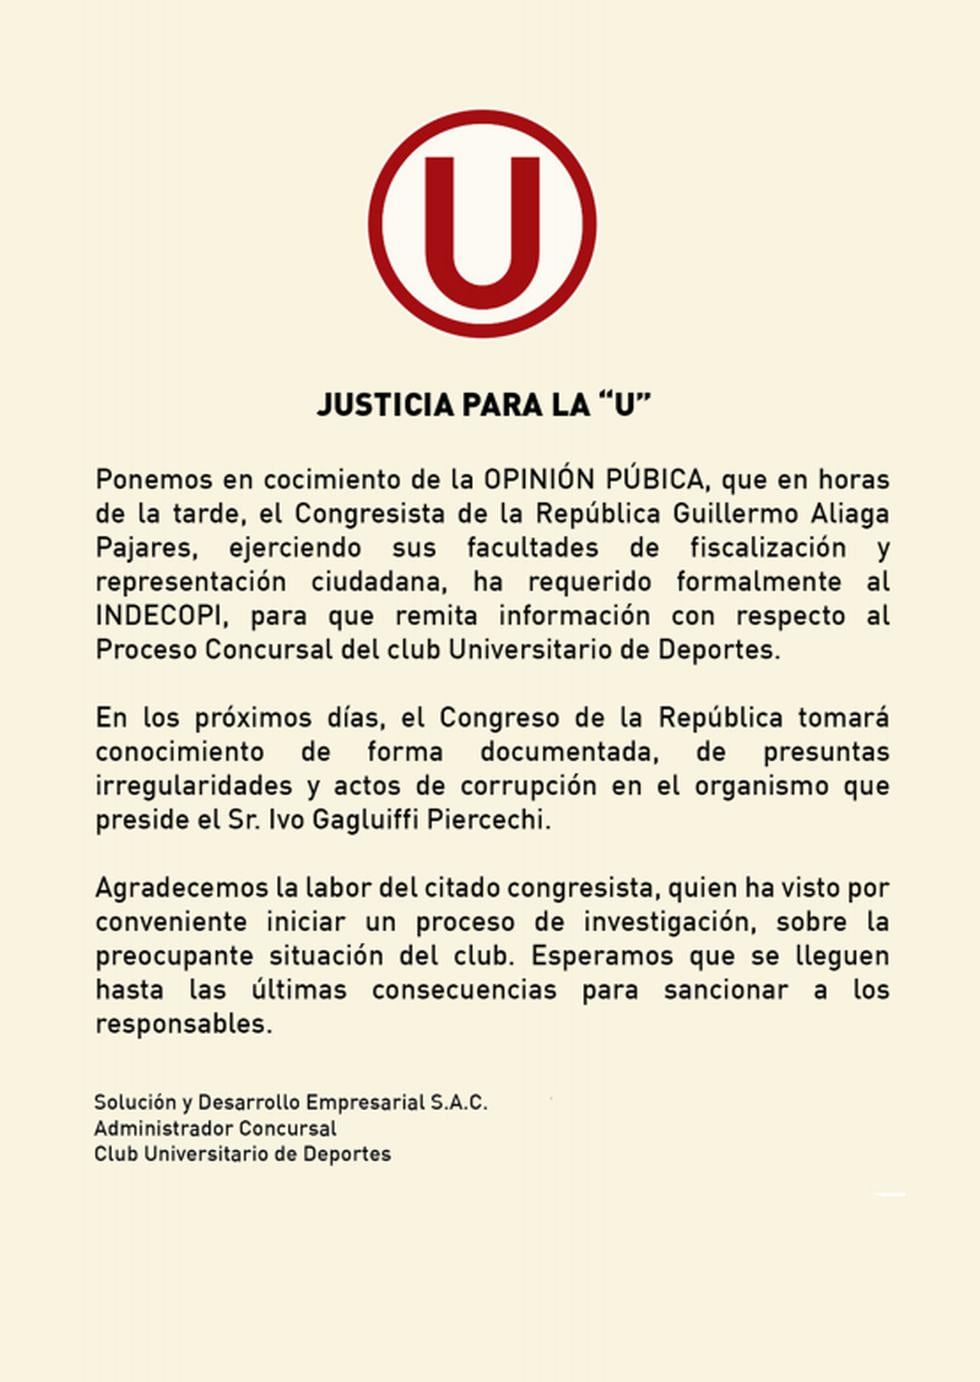 Universitario presentó documentación a Indecopi.